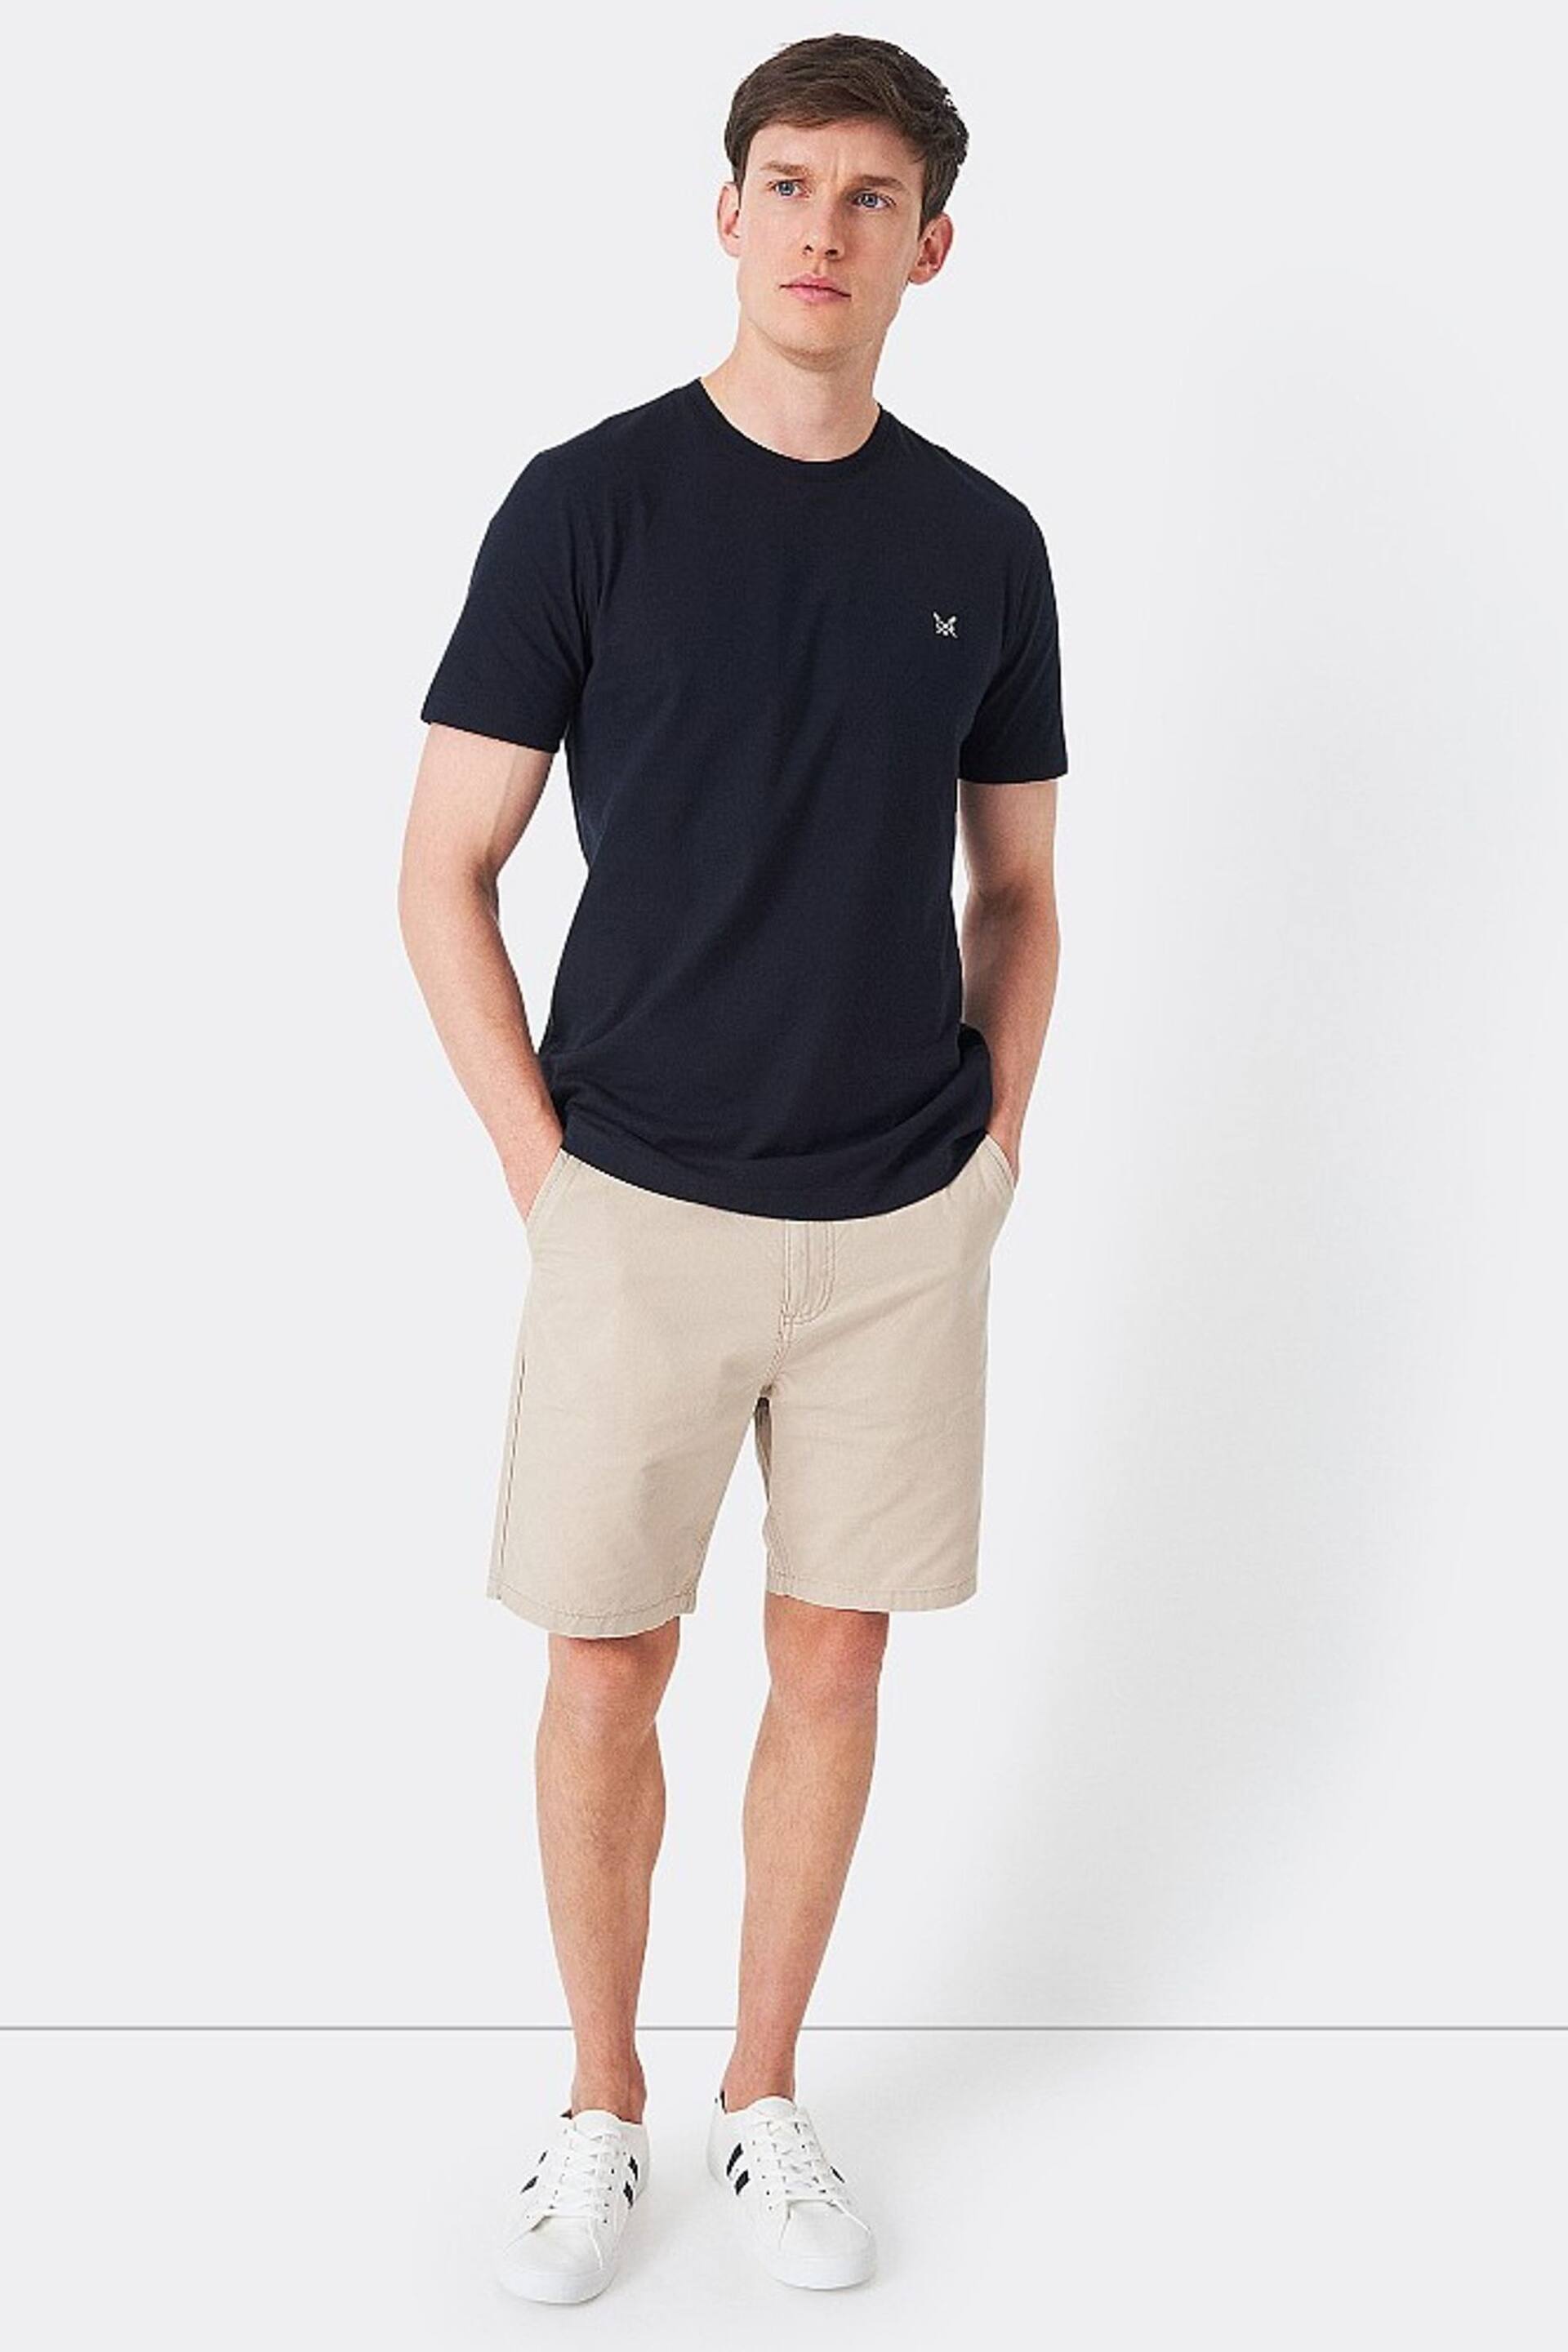 Crew Clothing Plain Cotton Classic T-Shirt - Image 3 of 4